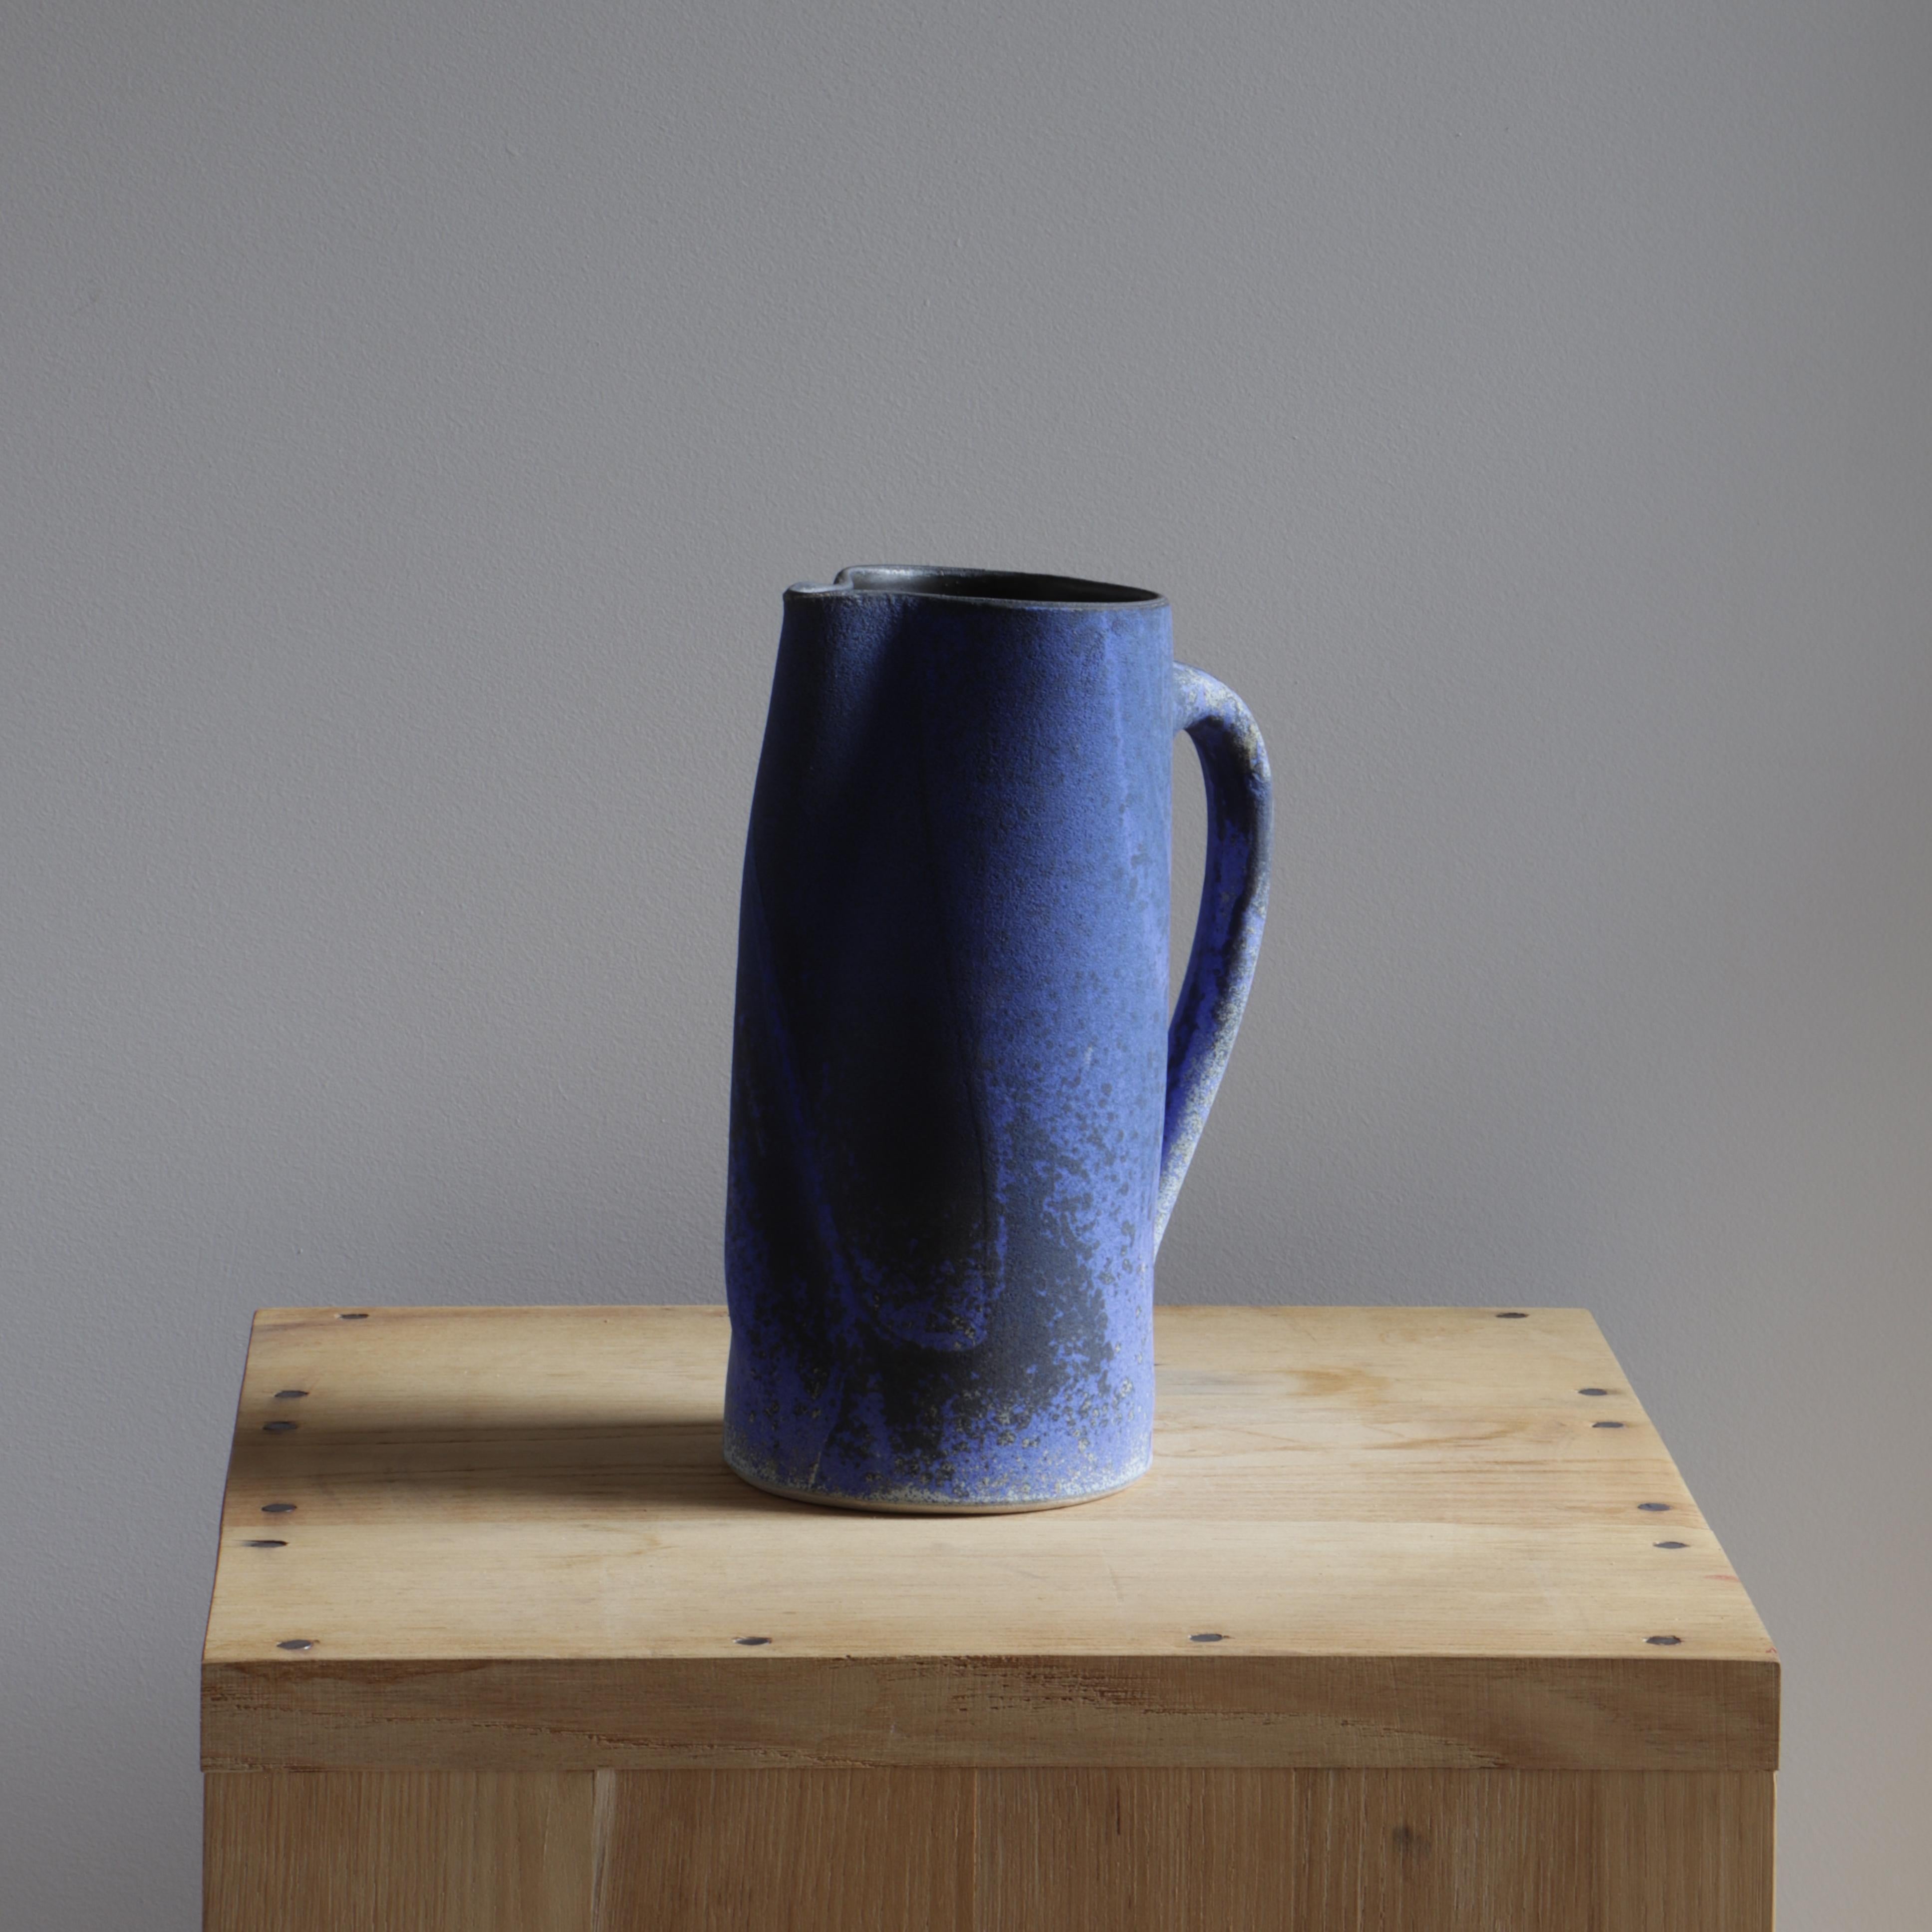 French Blue jug '4', Ingrid Van Munster